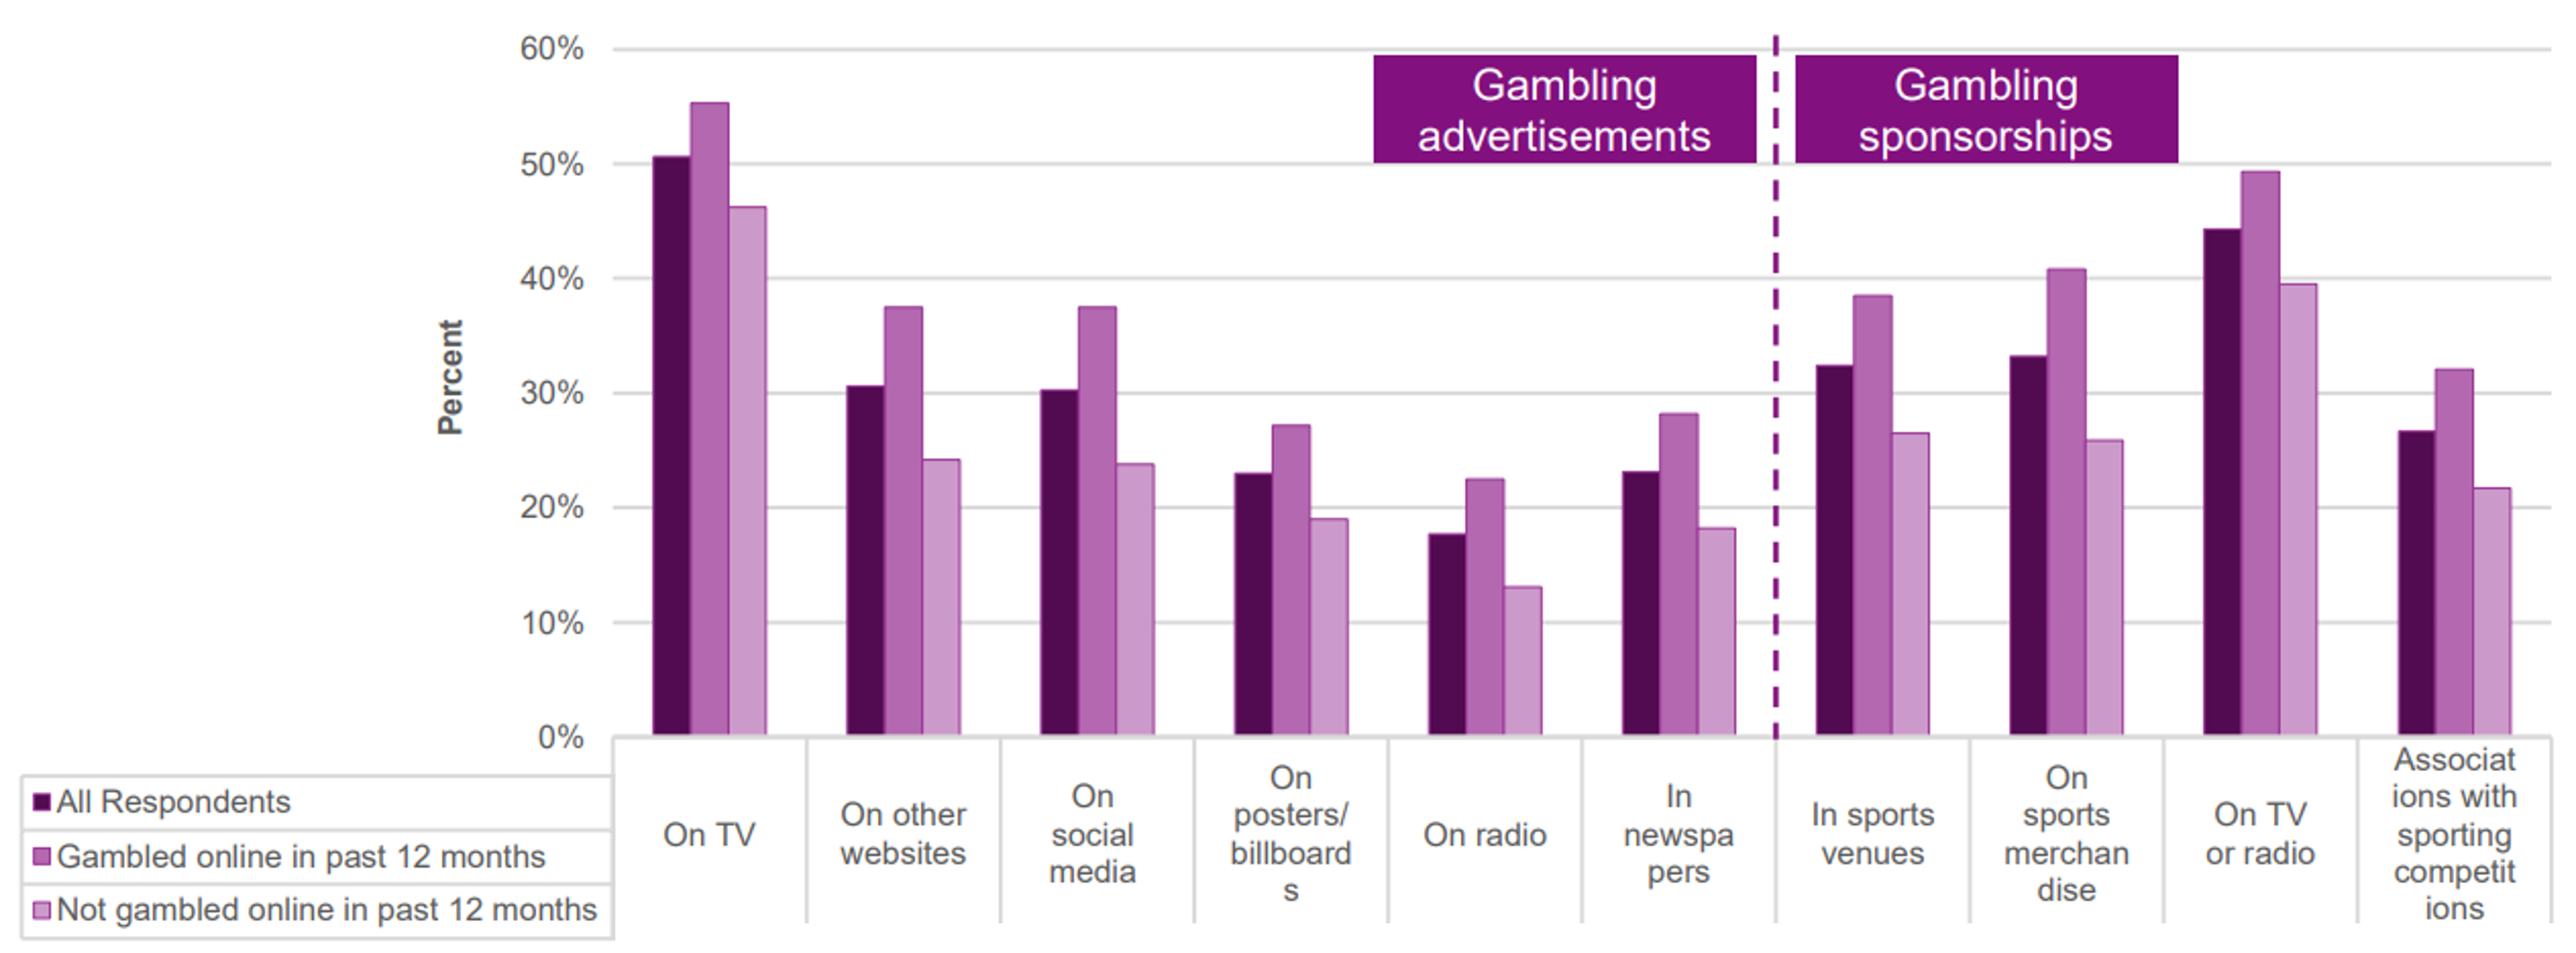 Seen or heard any gambling advertising and sponsorships at least weekly by gambling status